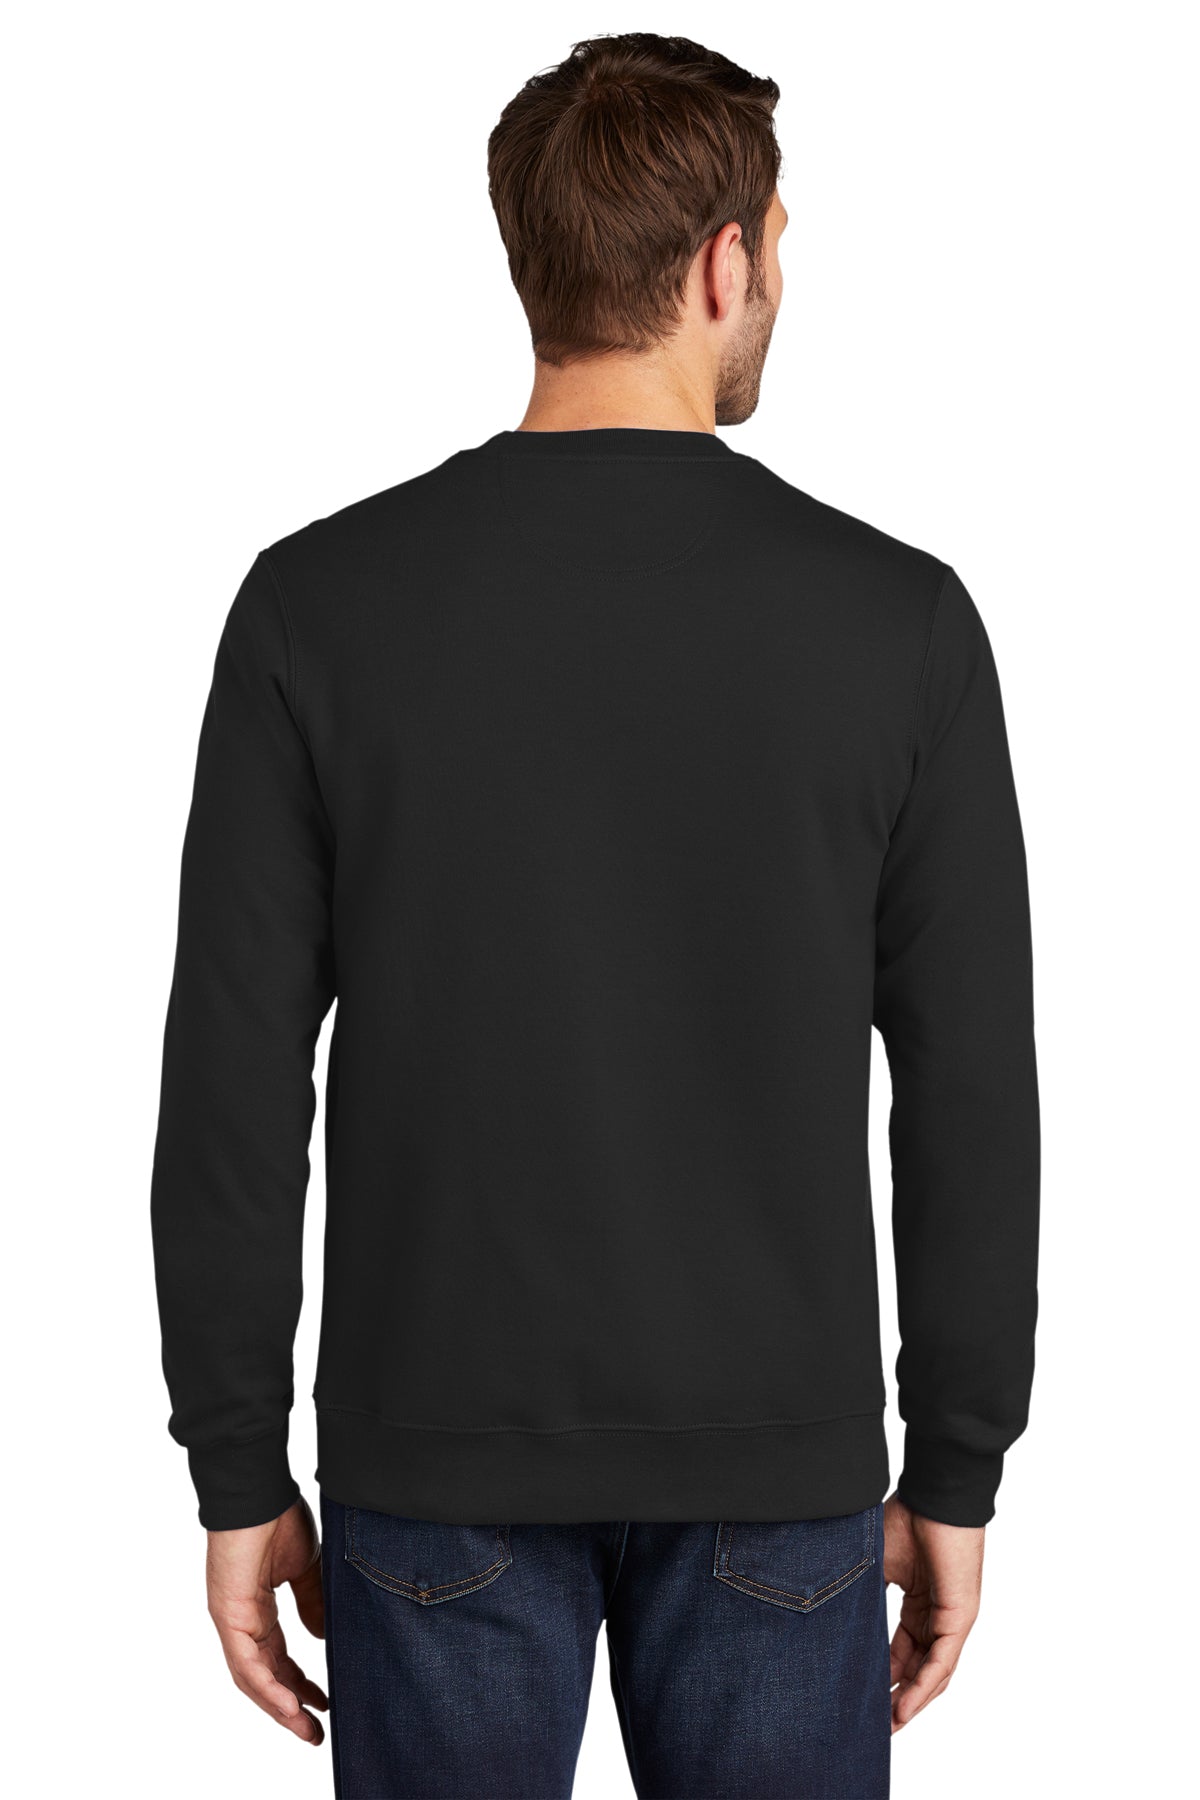 port & company_pc850 _jet black_company_logo_sweatshirts